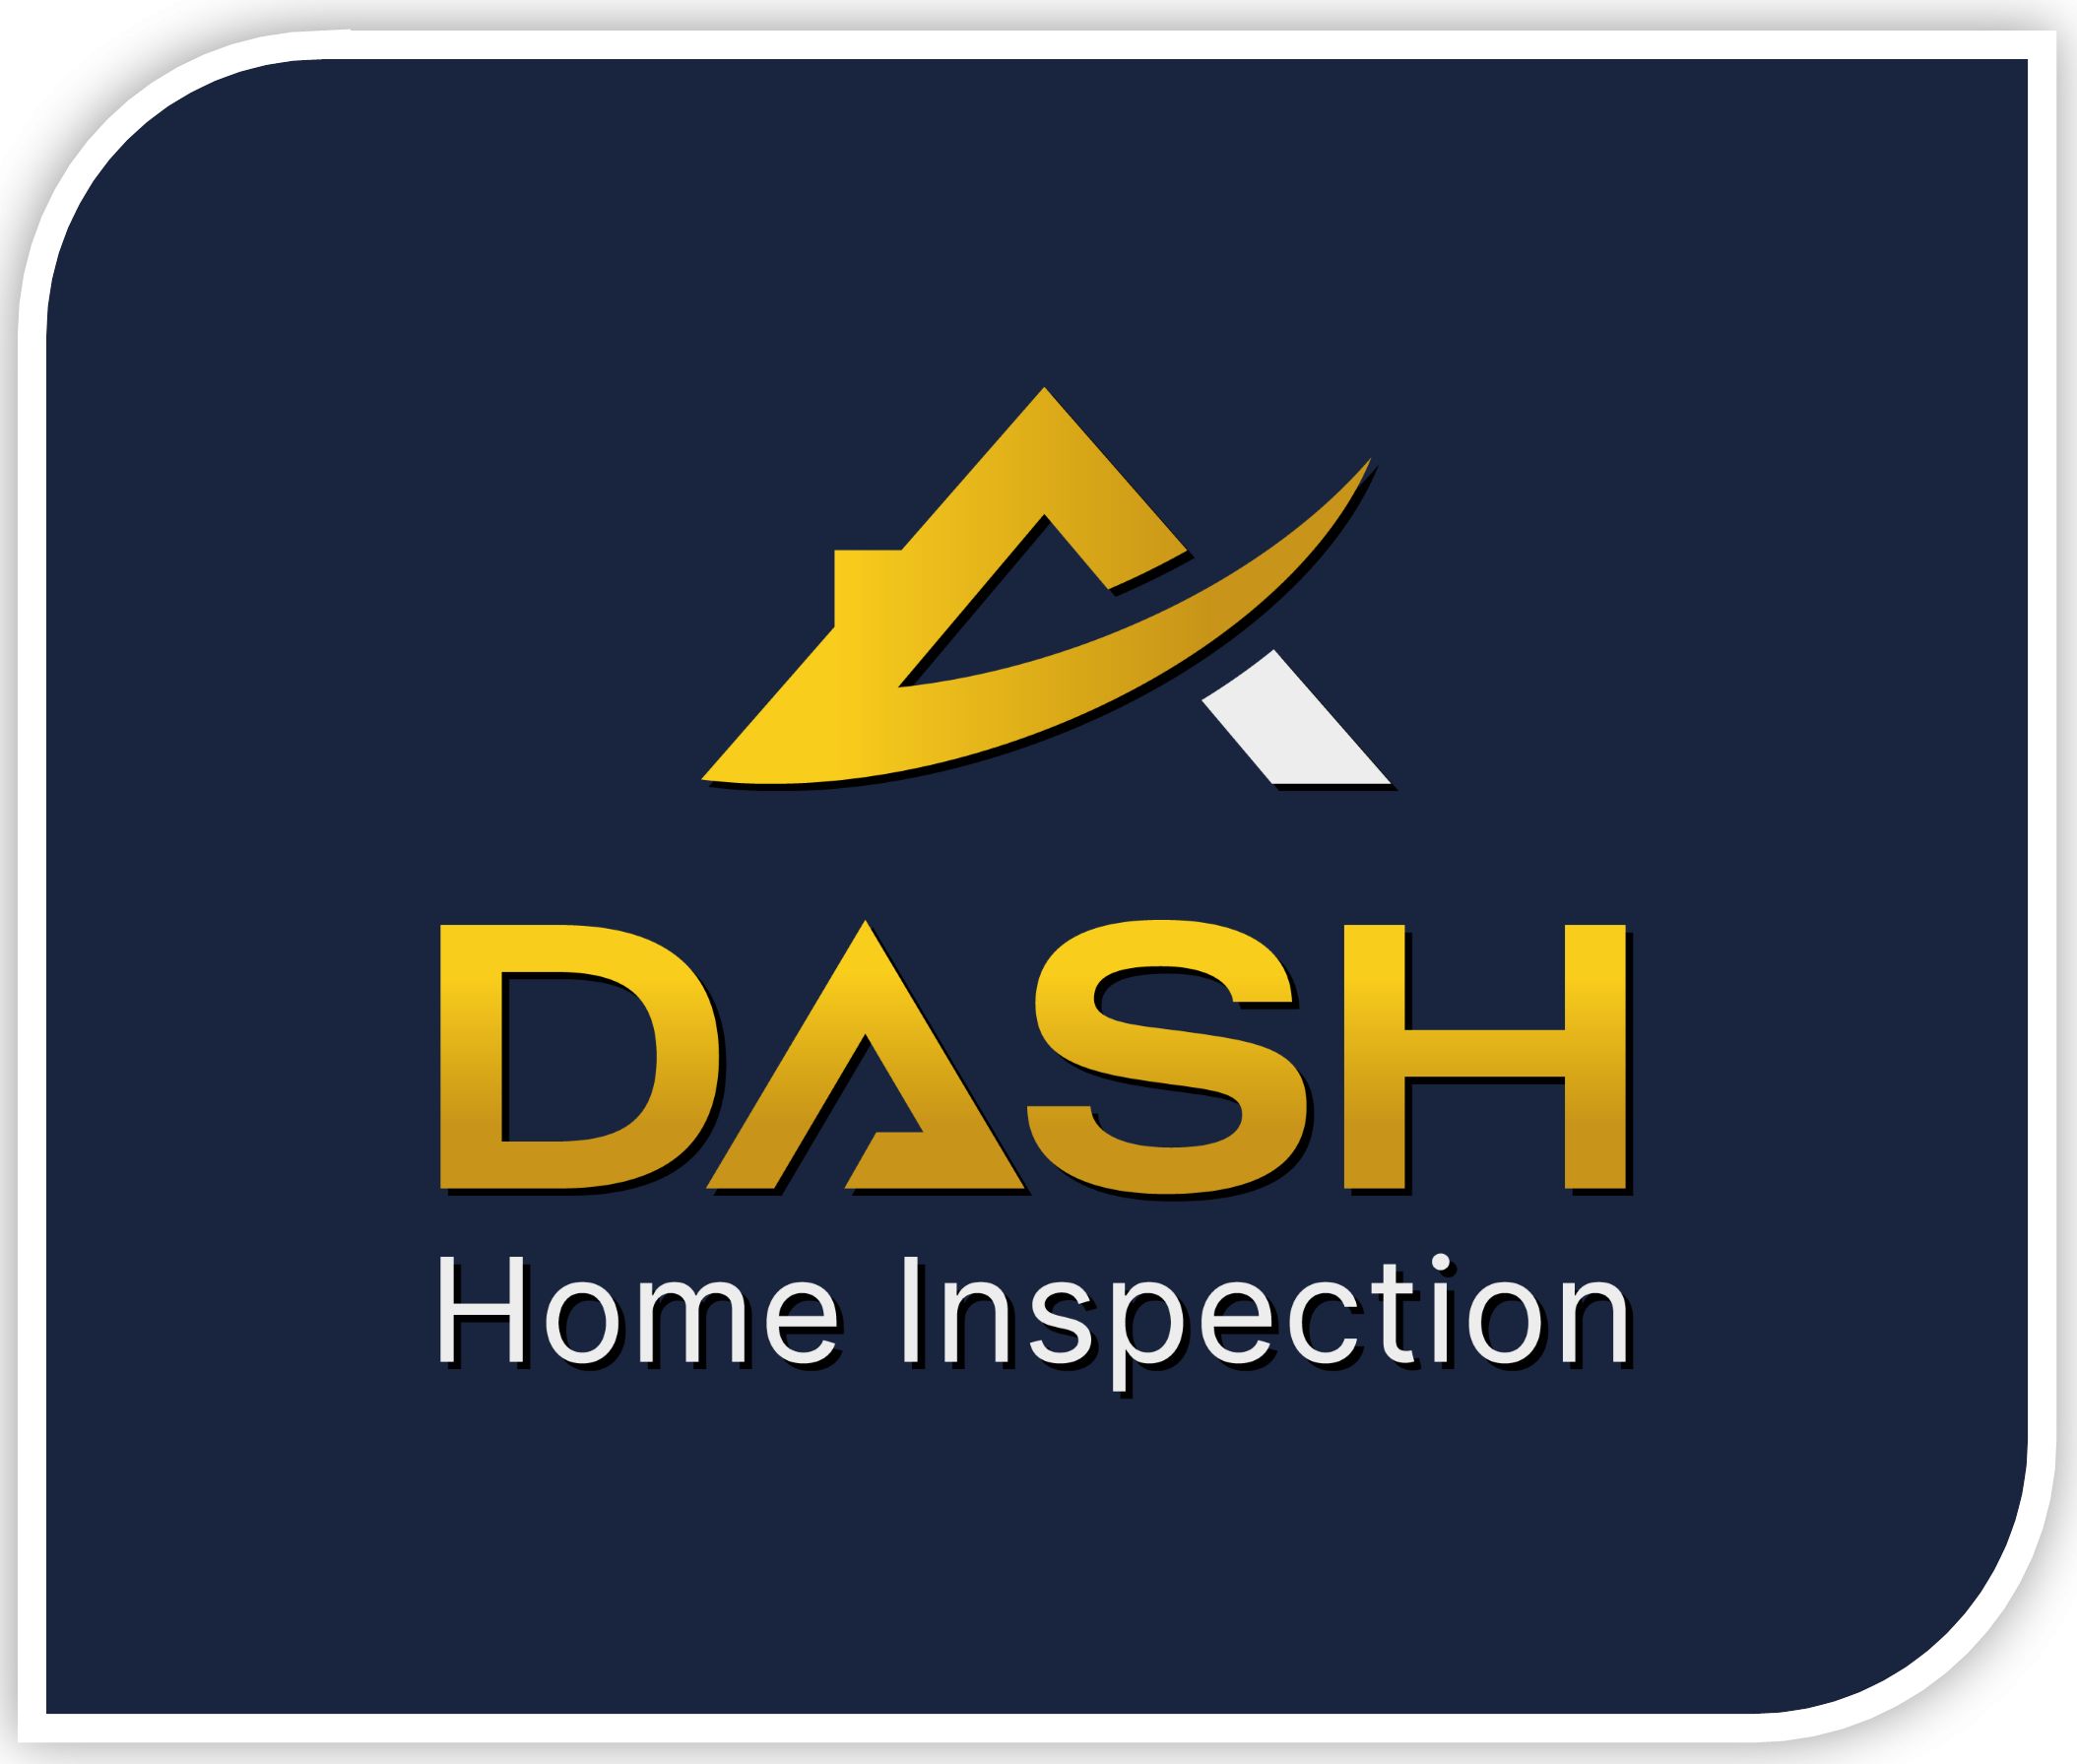 Dash Home Inspection - New Logo